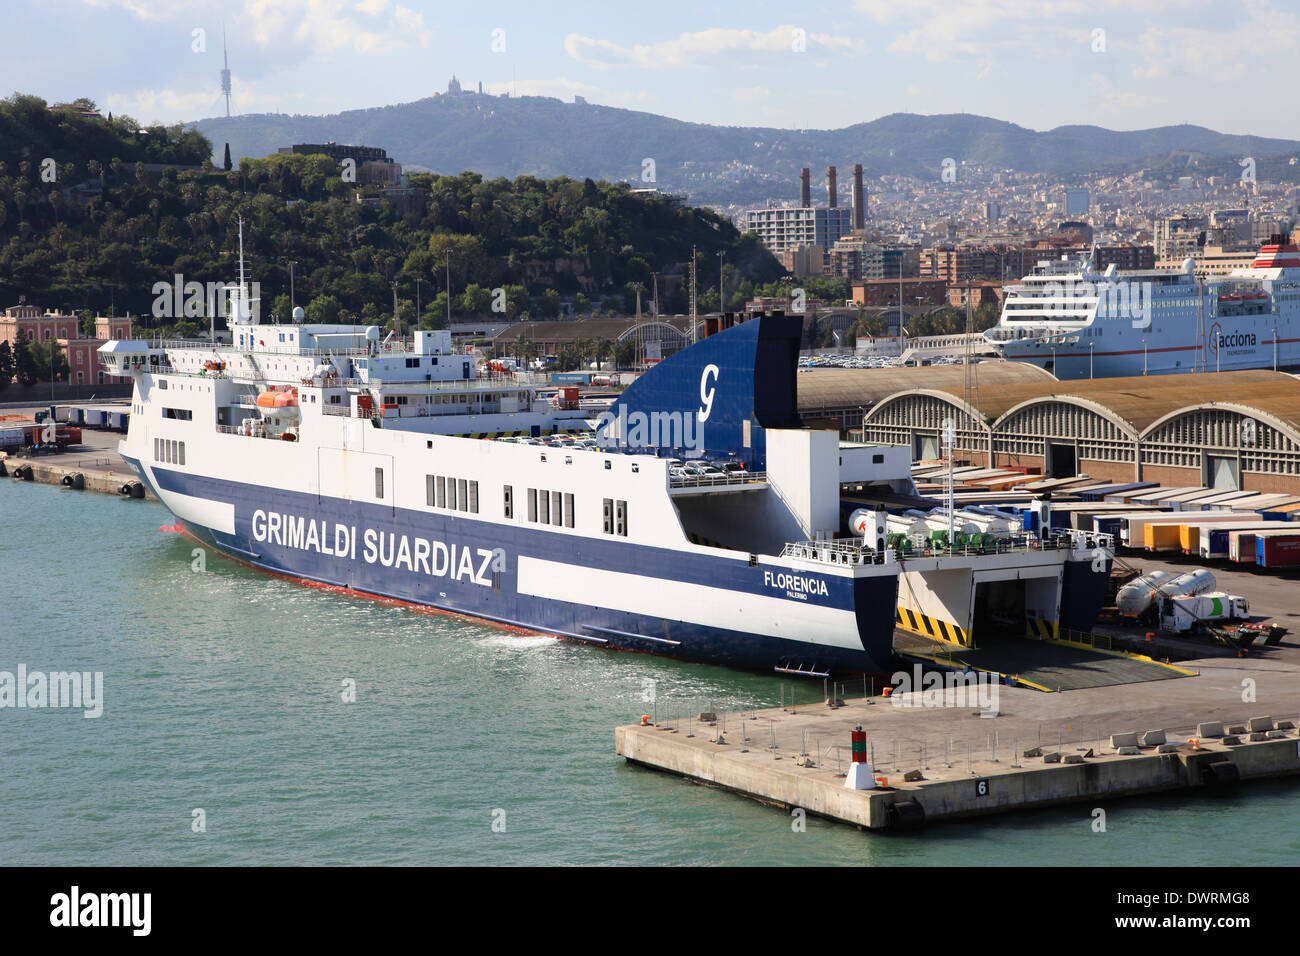 Grimaldi Suardiaz Line Ro-Ro ferry mv Florencia in Barcelona Spain May 15, 2011 Stock Photo